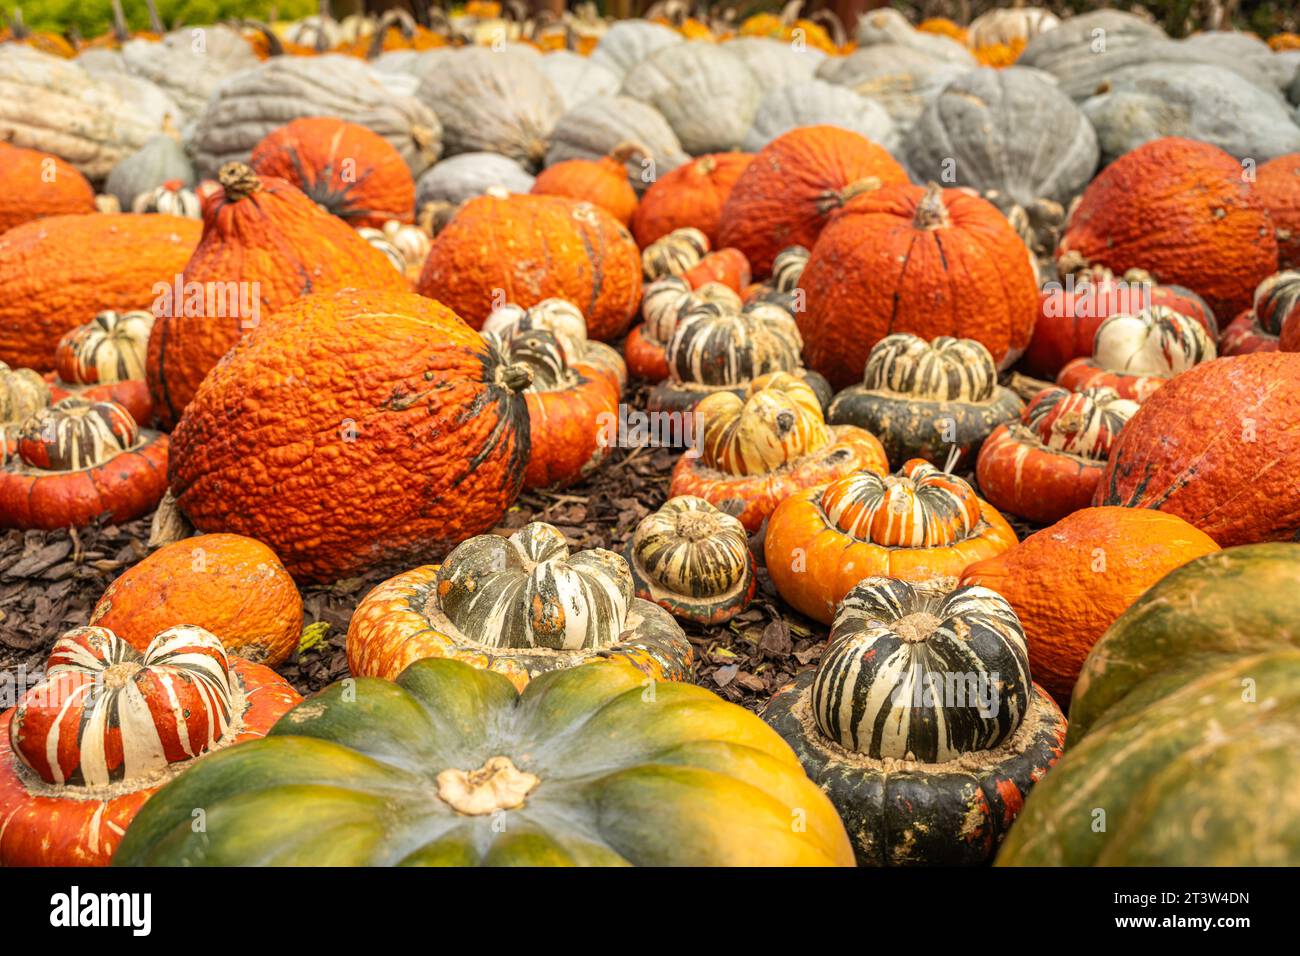 A wide variety of pumpkins on display at the Atlanta Botanical Garden in Midtown Atlanta, Georgia. (USA) Stock Photo